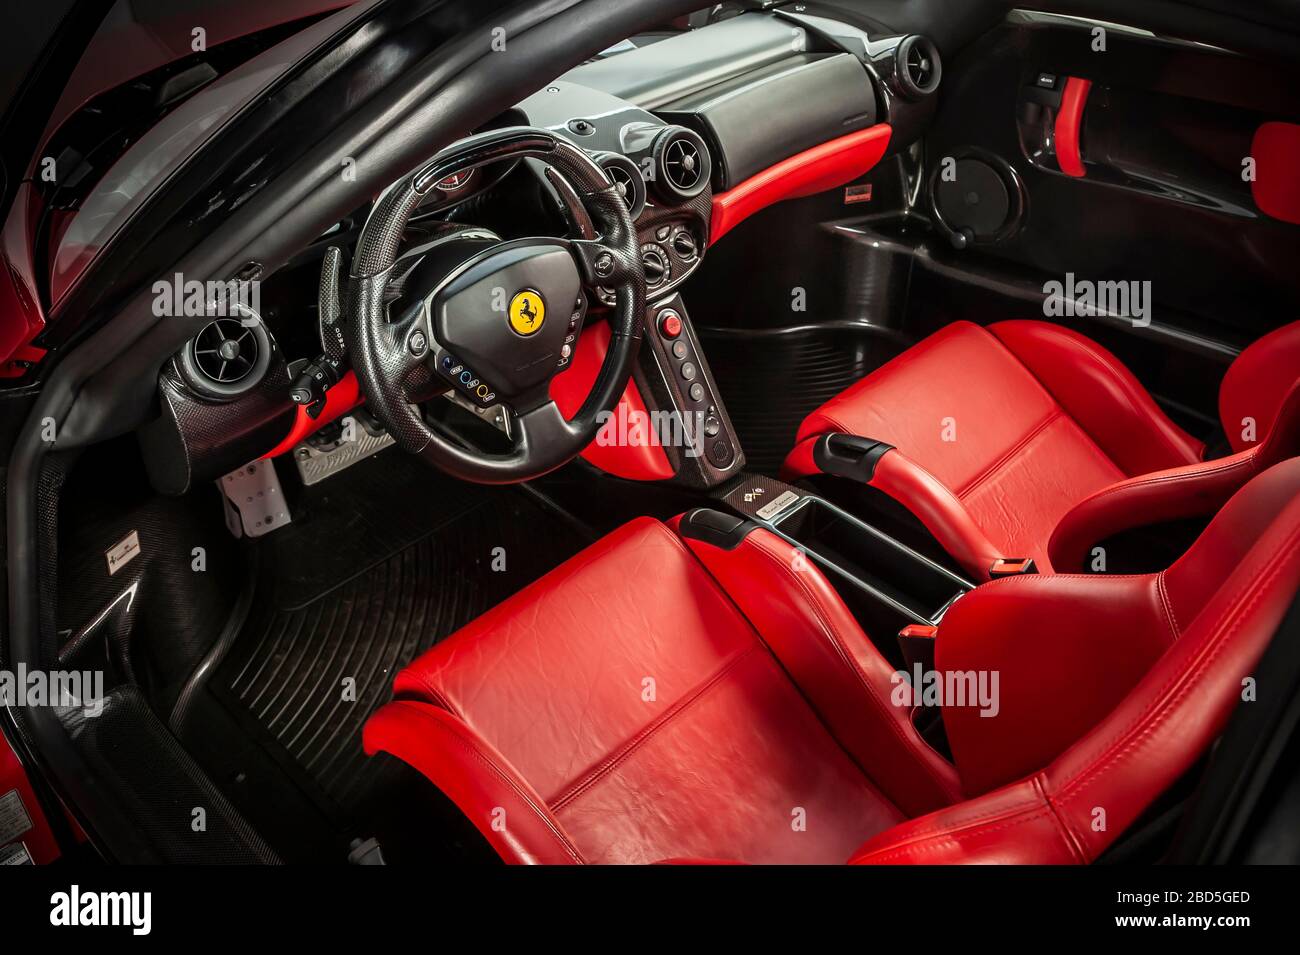 Ferrari Enzo built to pay tribute to the Ferrari founder Enzo Ferrari. 6lt V12  engine producing 660hp. Stock Photo